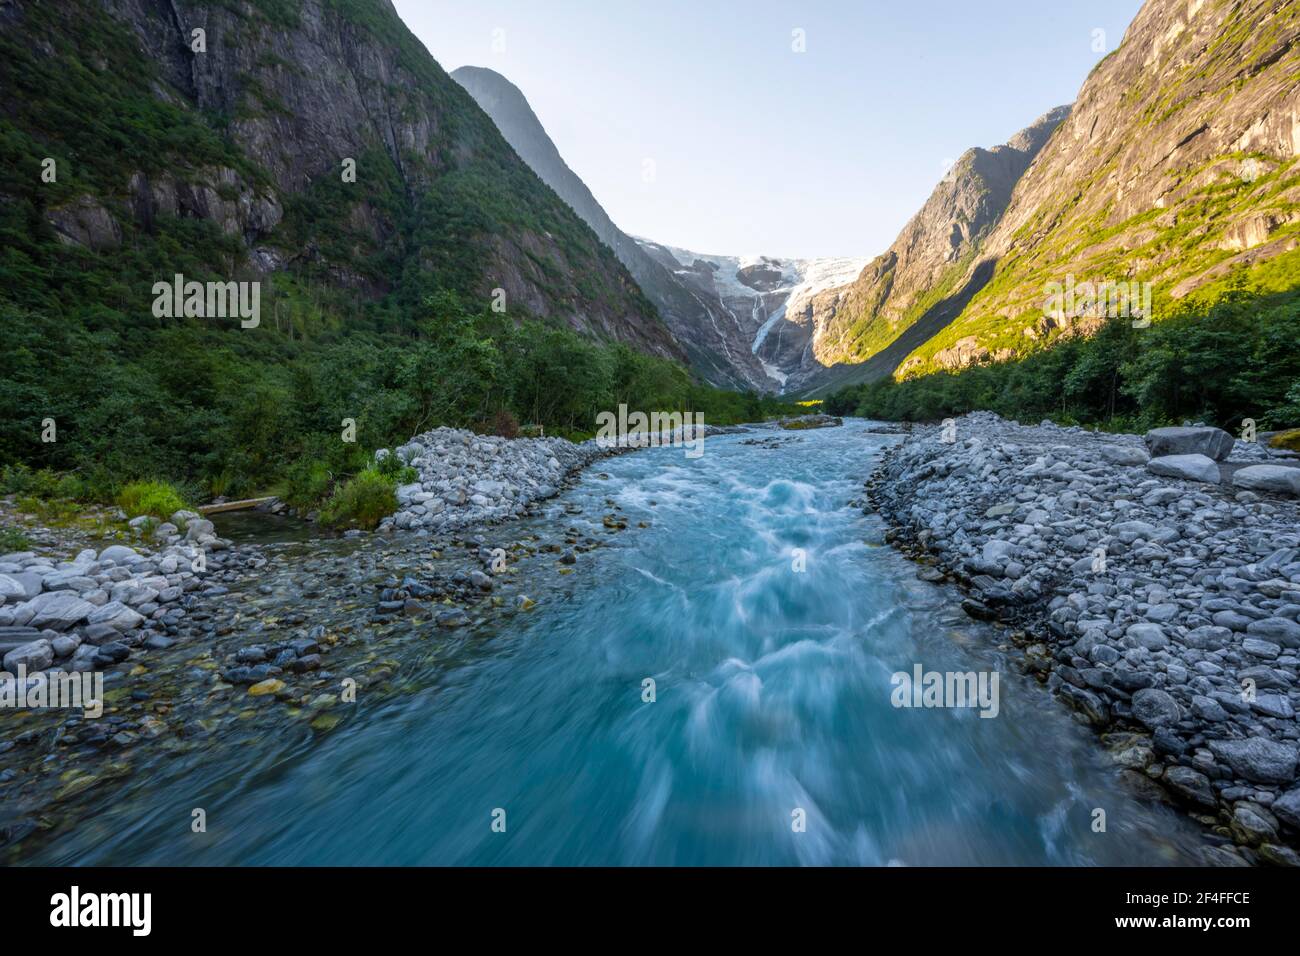 Kjenndalsbreen glacier with glacier river, mountains and waterfalls on steep mountain sides, Loen, Vestland, Norway Stock Photo